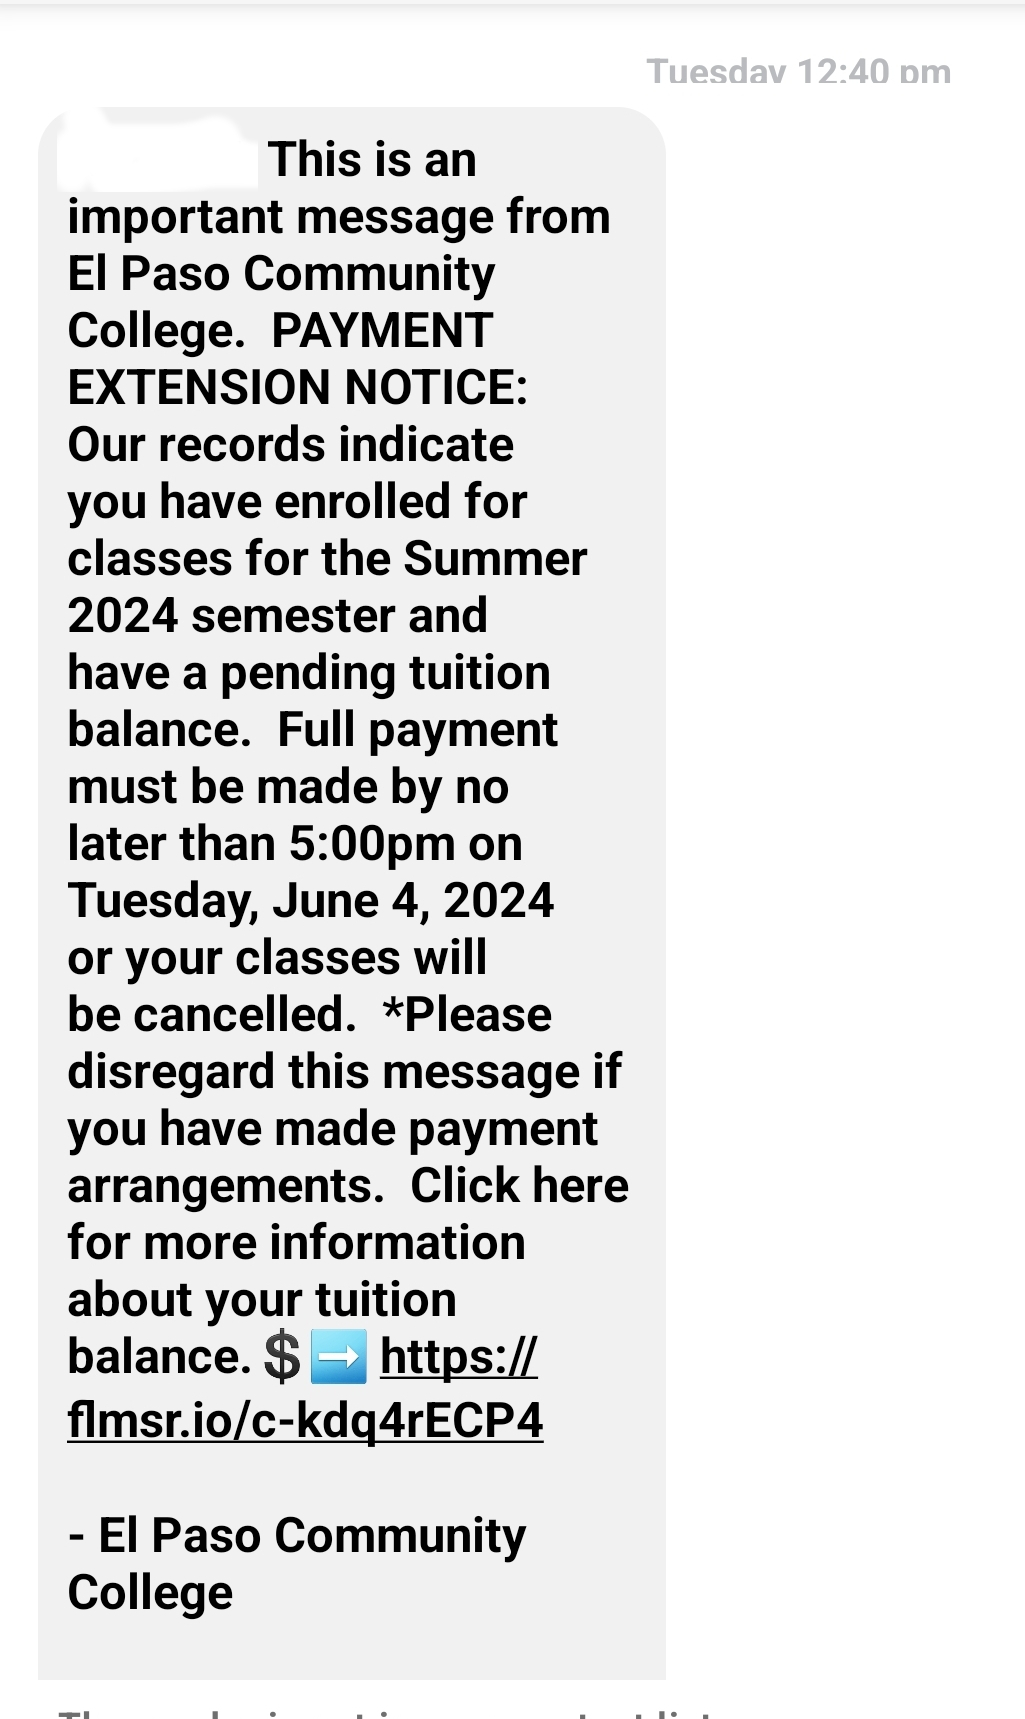 tuition deadline, text message: june 4